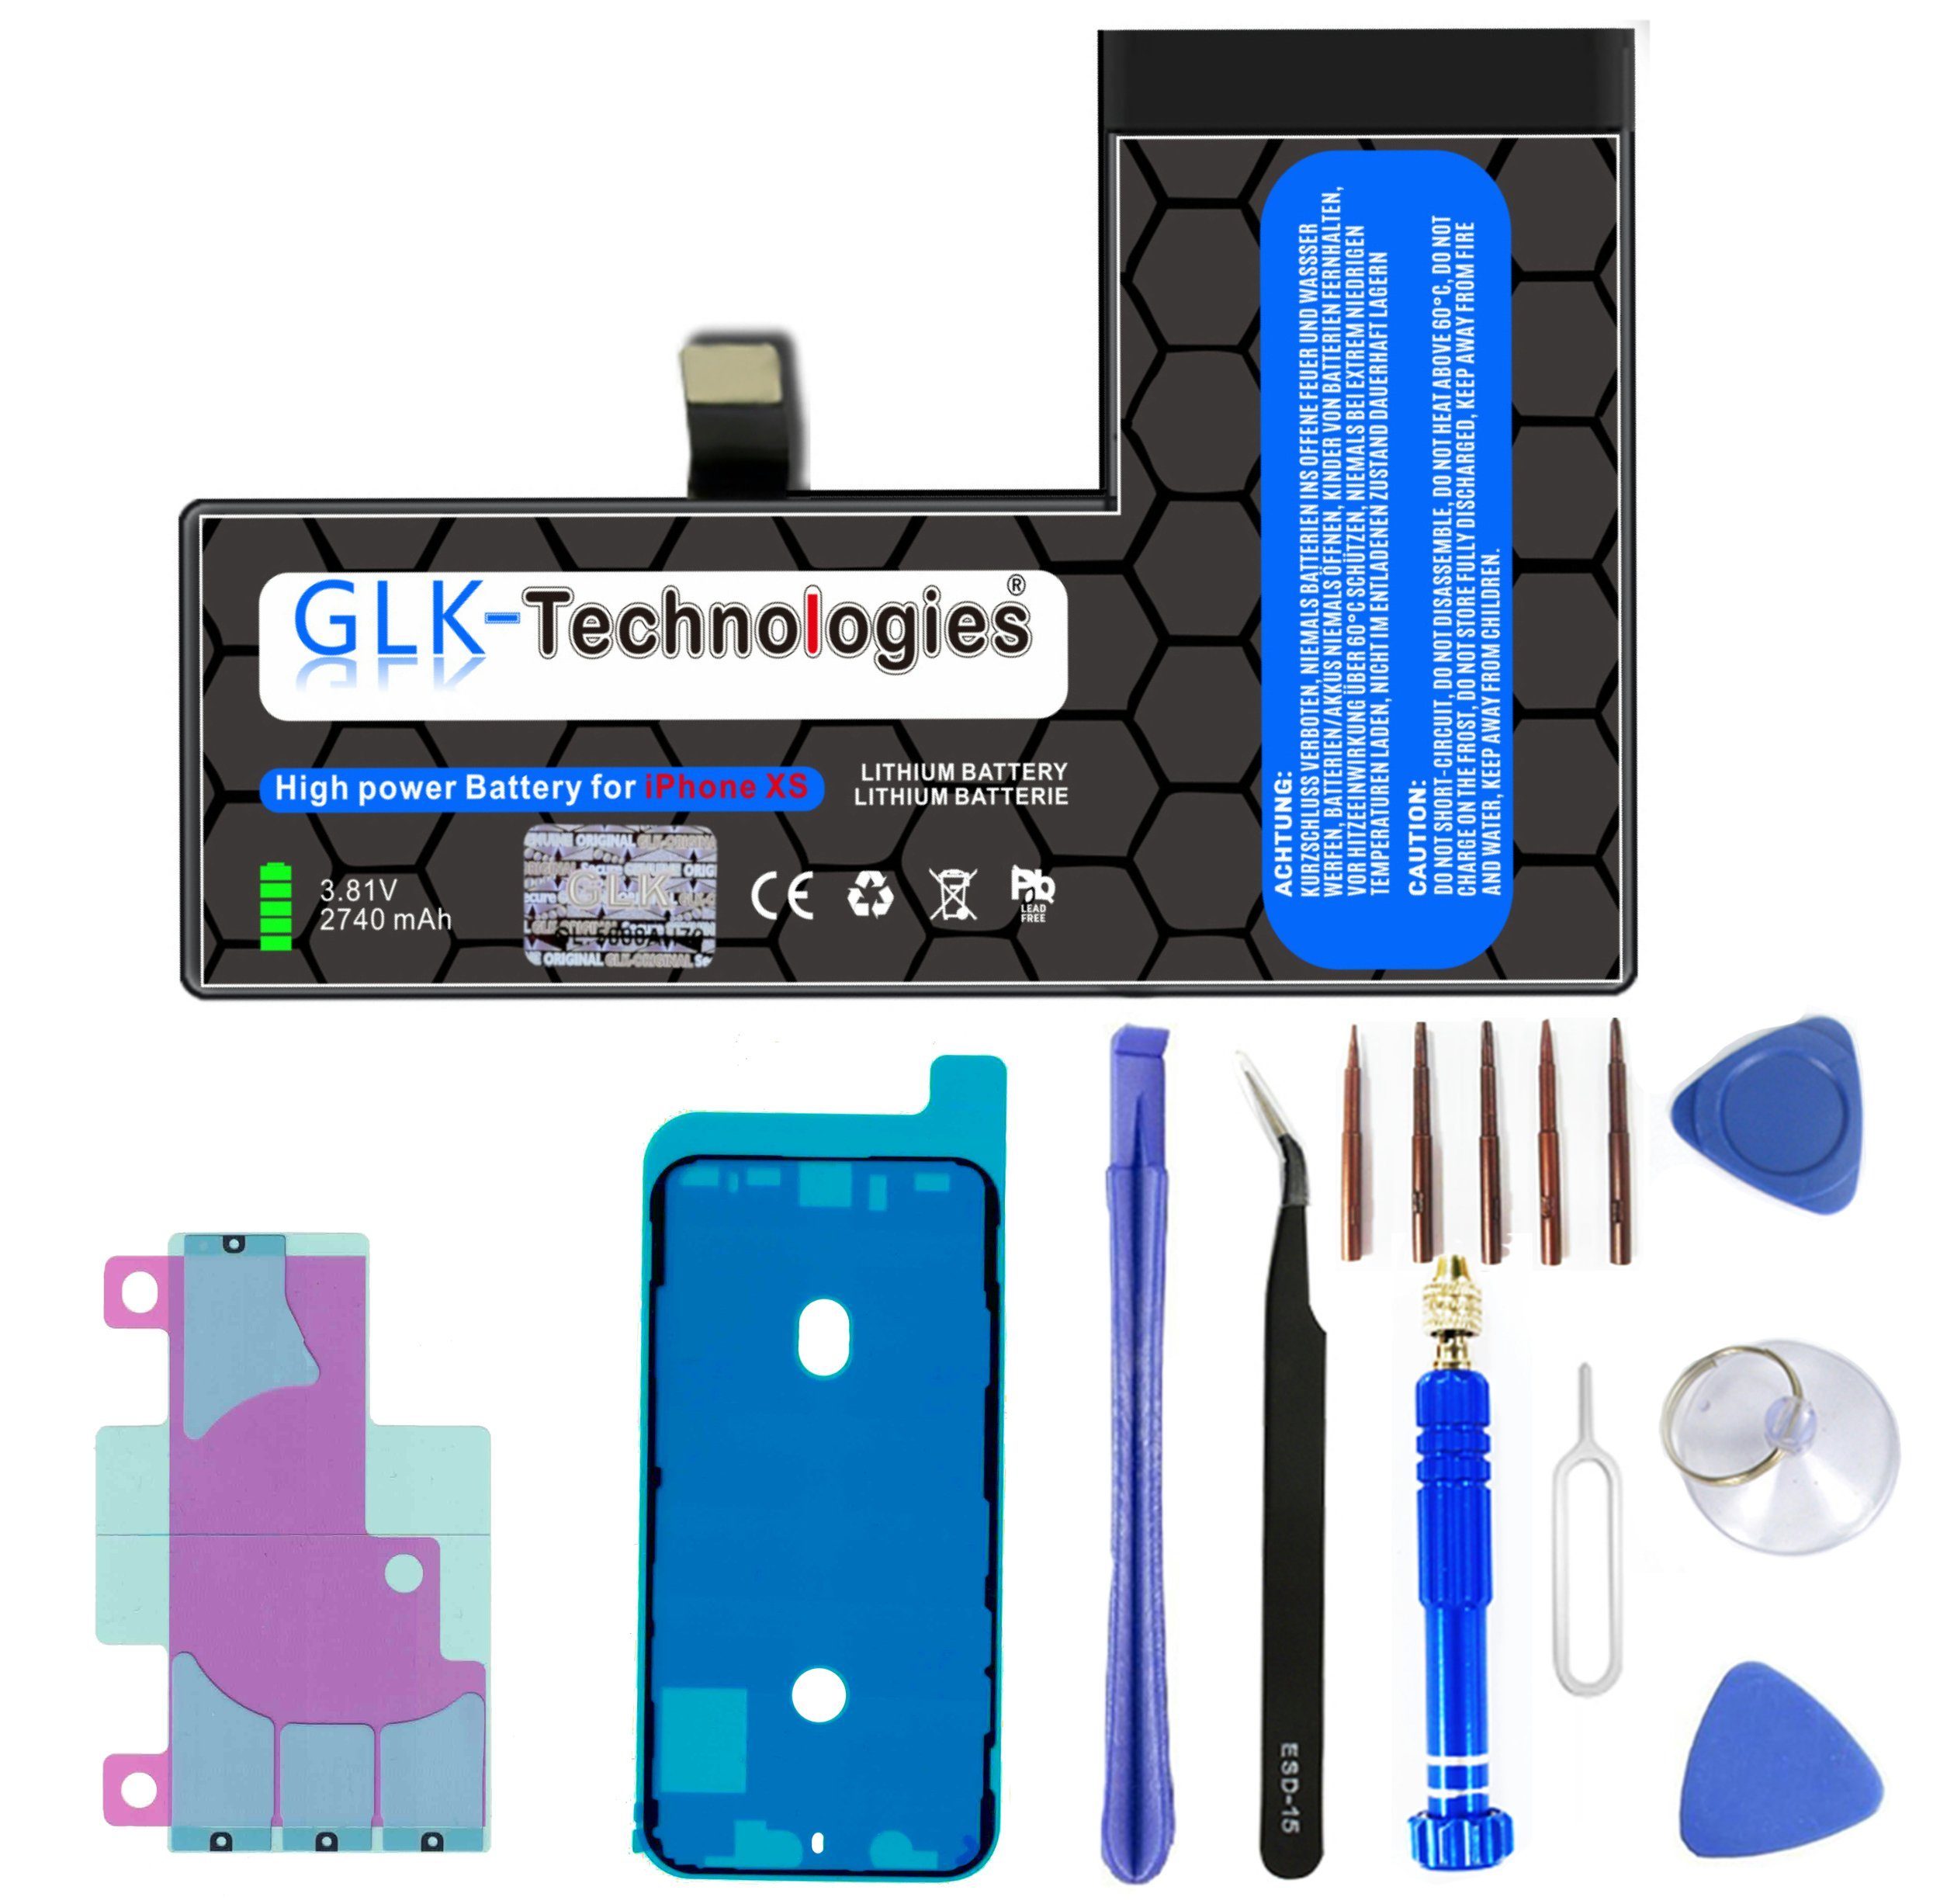 kompatibel Akku mit (3,85 Öffnungswerkzeug mit Apple mAh Smartphone-Akku Power 2740 iPhone XS Ersatz High V) GLK-Technologies